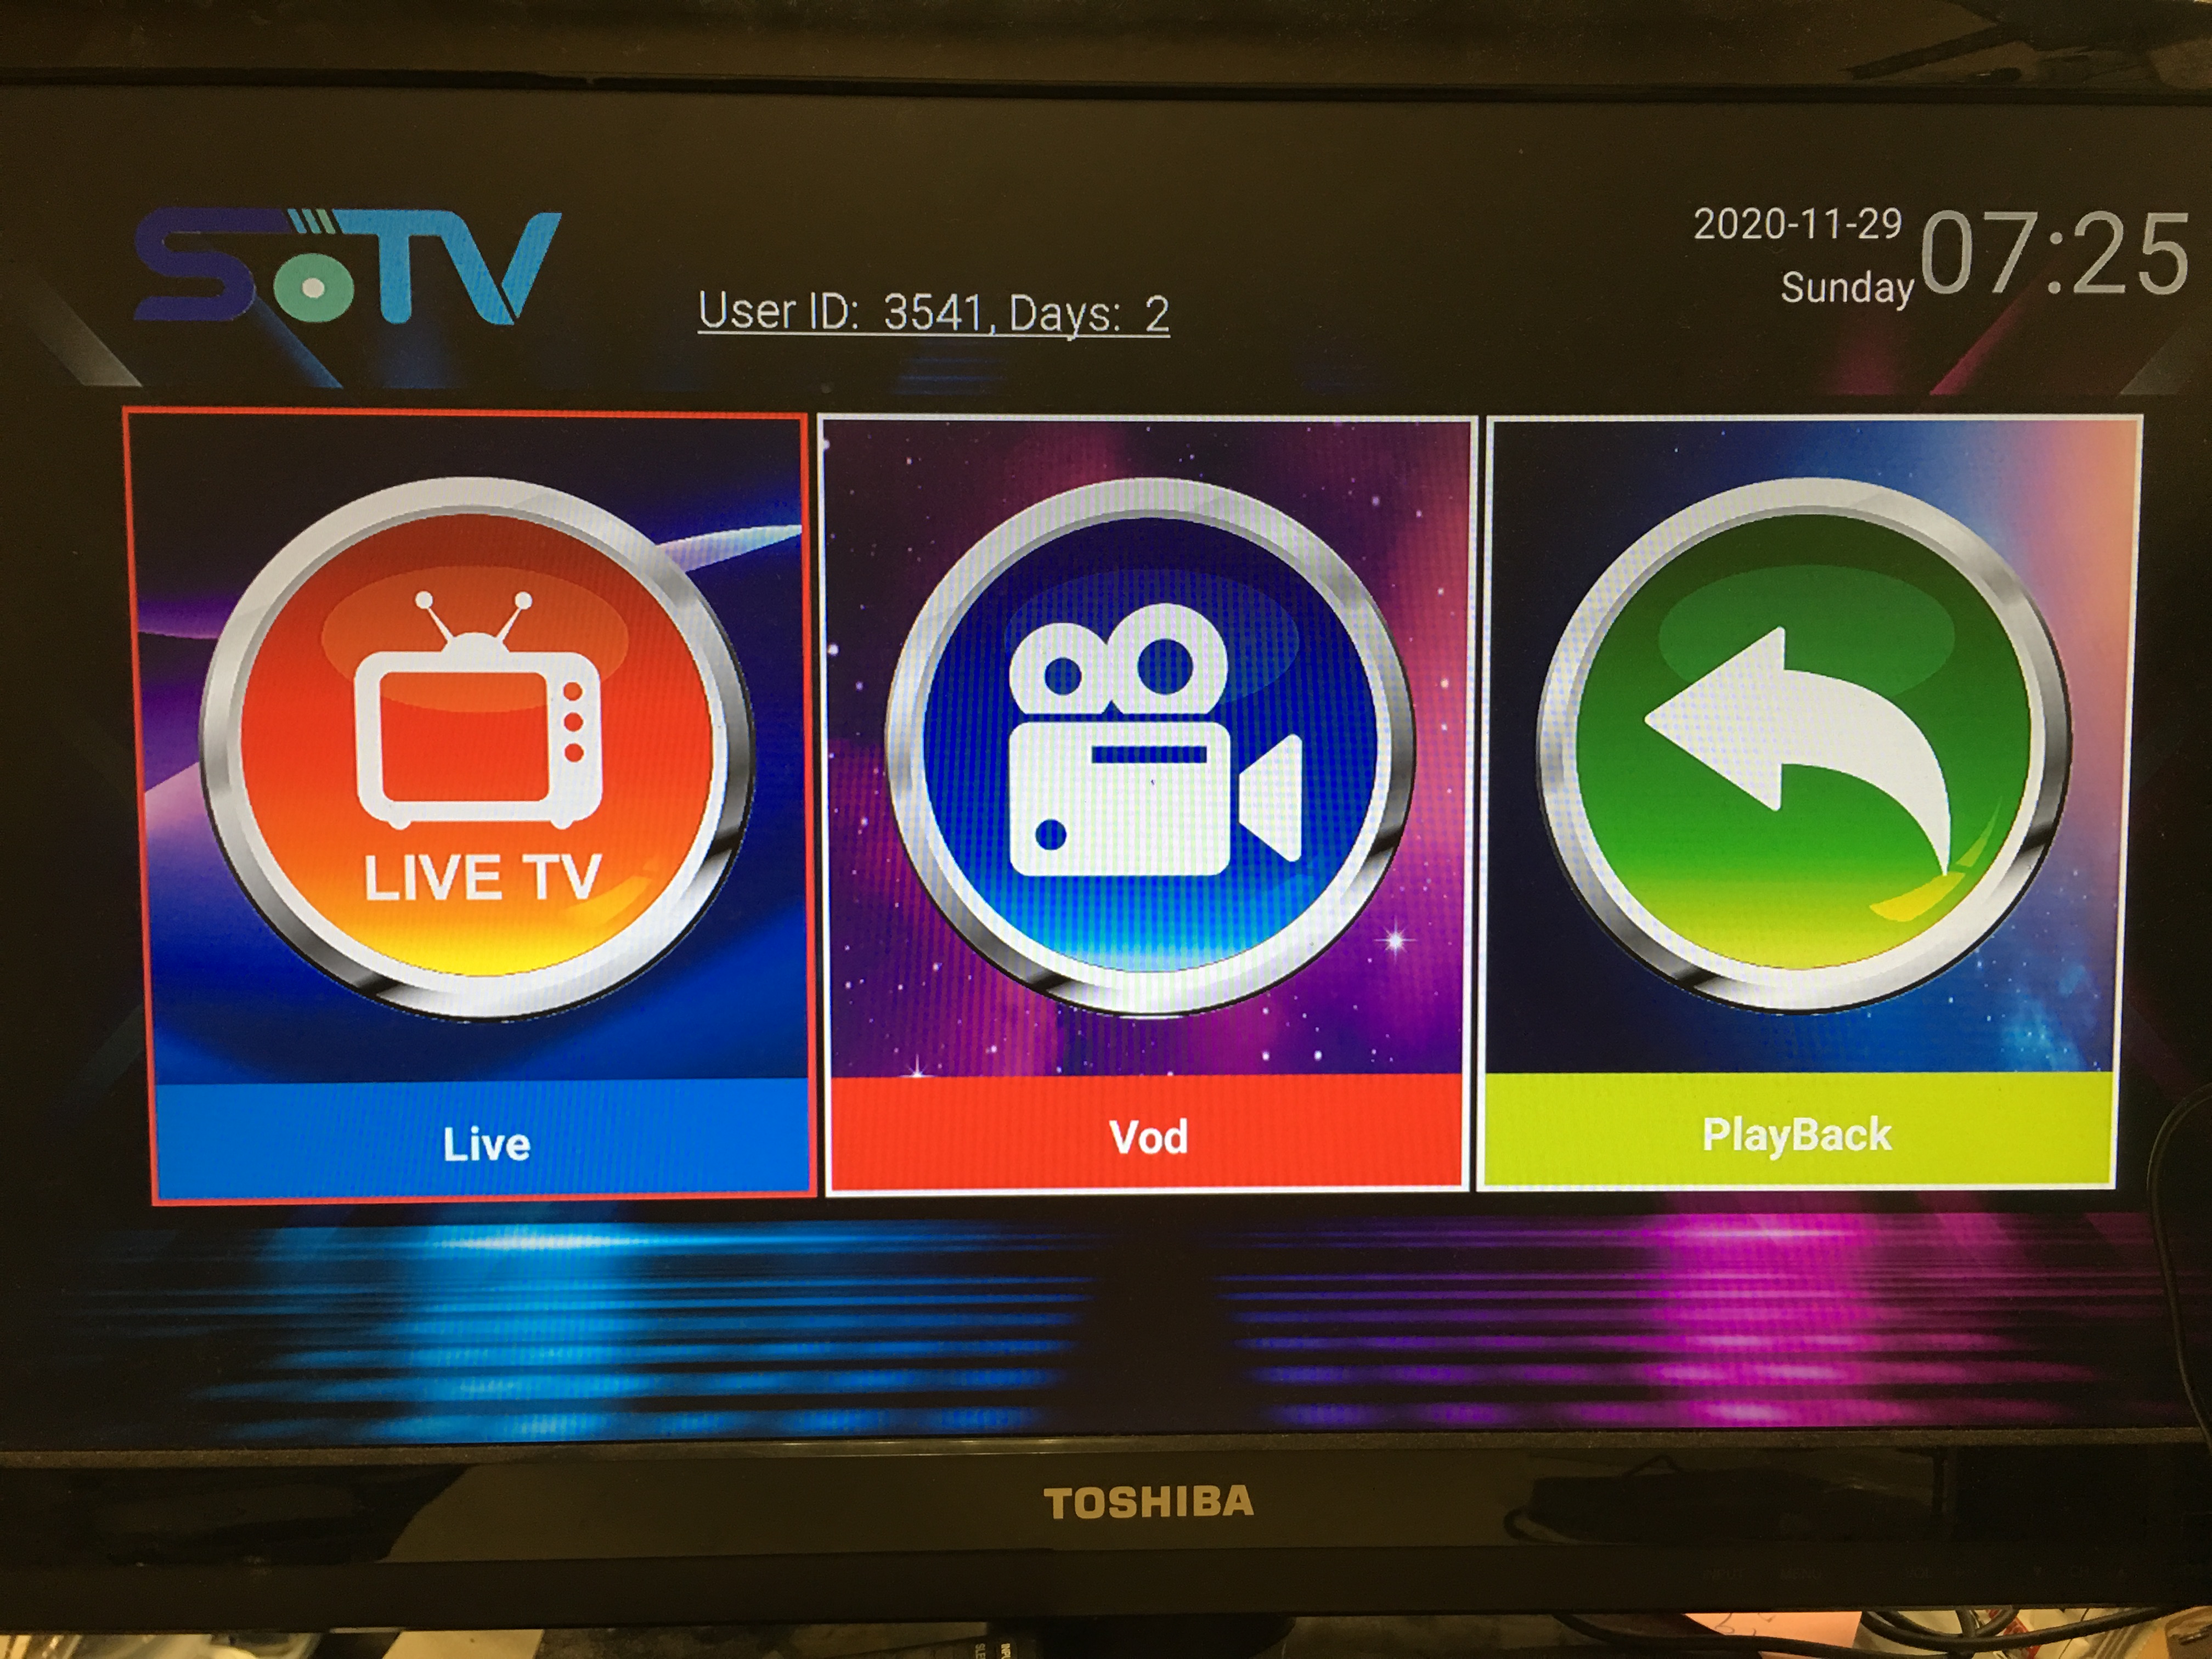 SoTv Live TV Movie App for 1 year